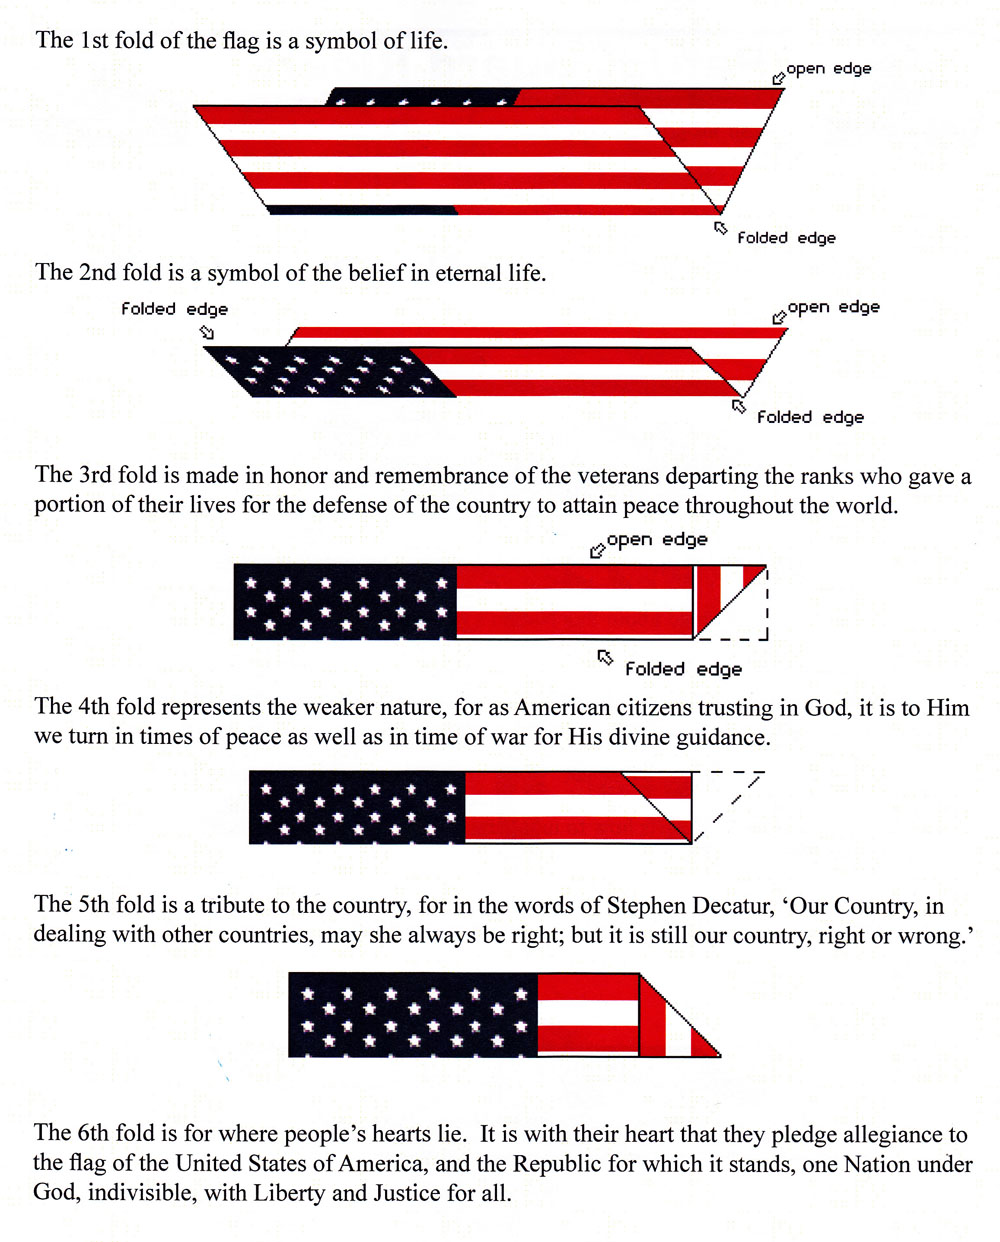 US Flag Folding meaning!